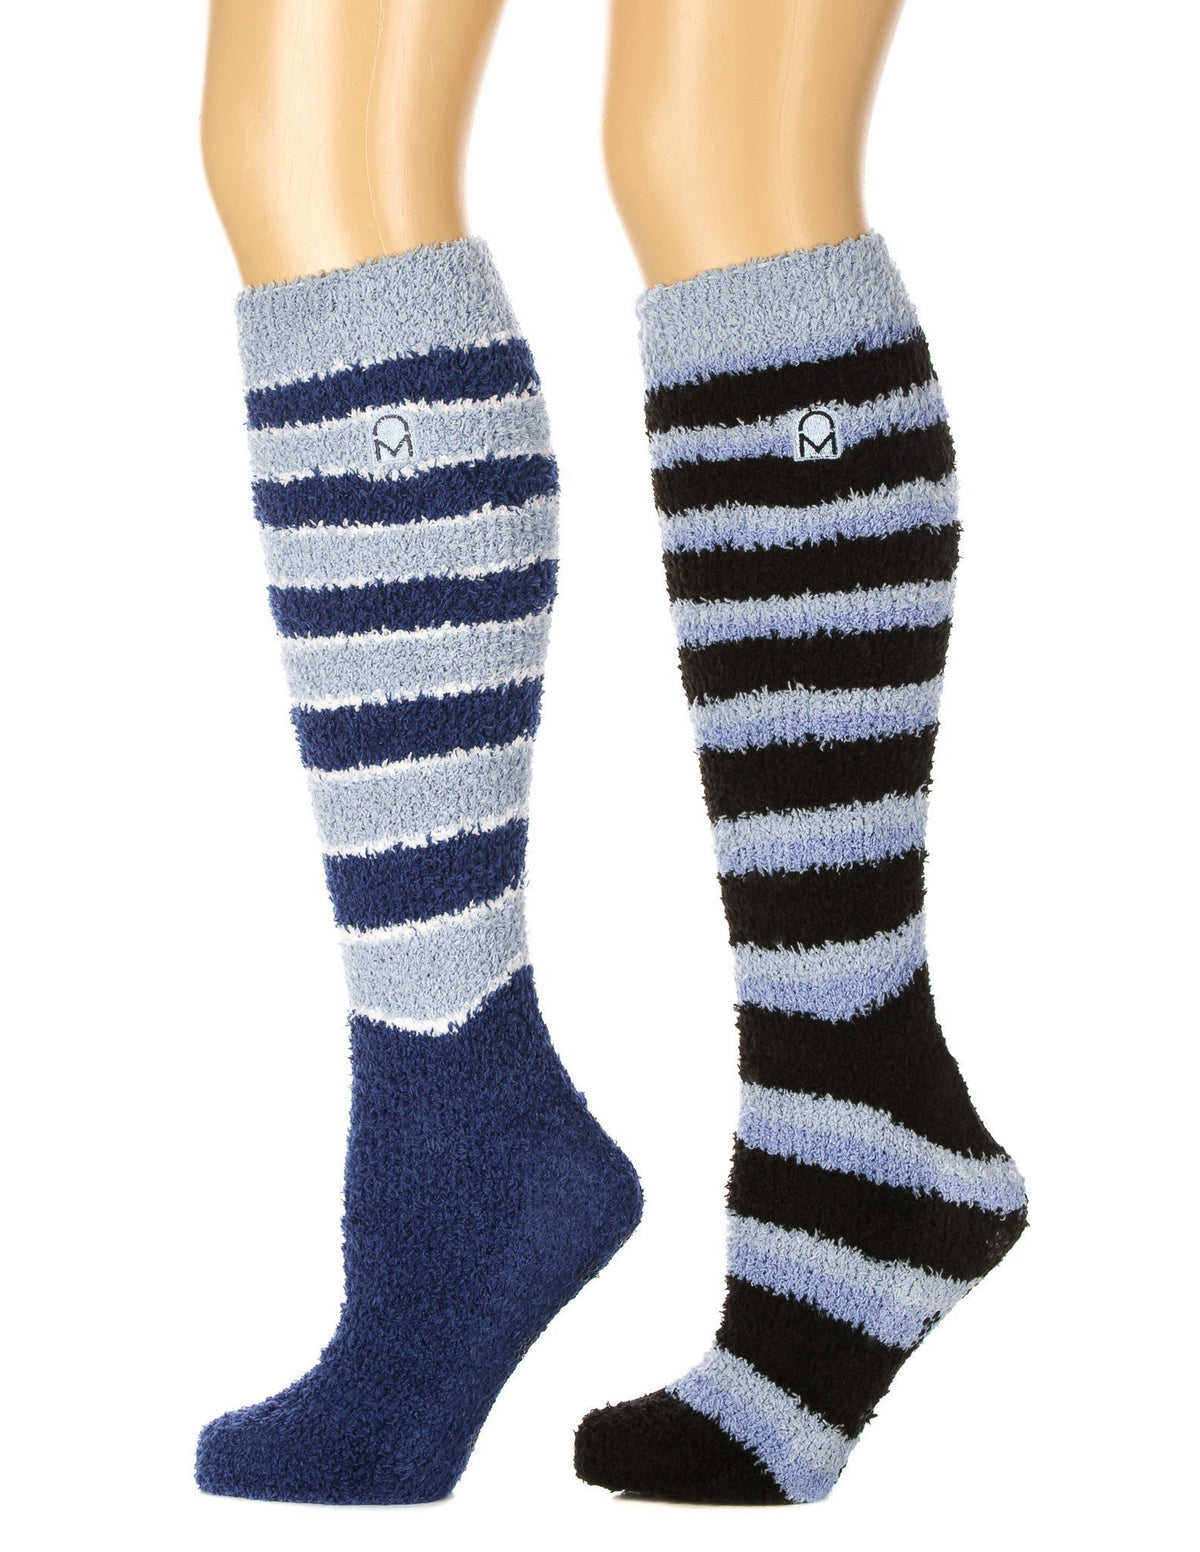 Women's (2 Pairs) Soft Anti-Skid Fuzzy Winter Knee High Socks - Set A3